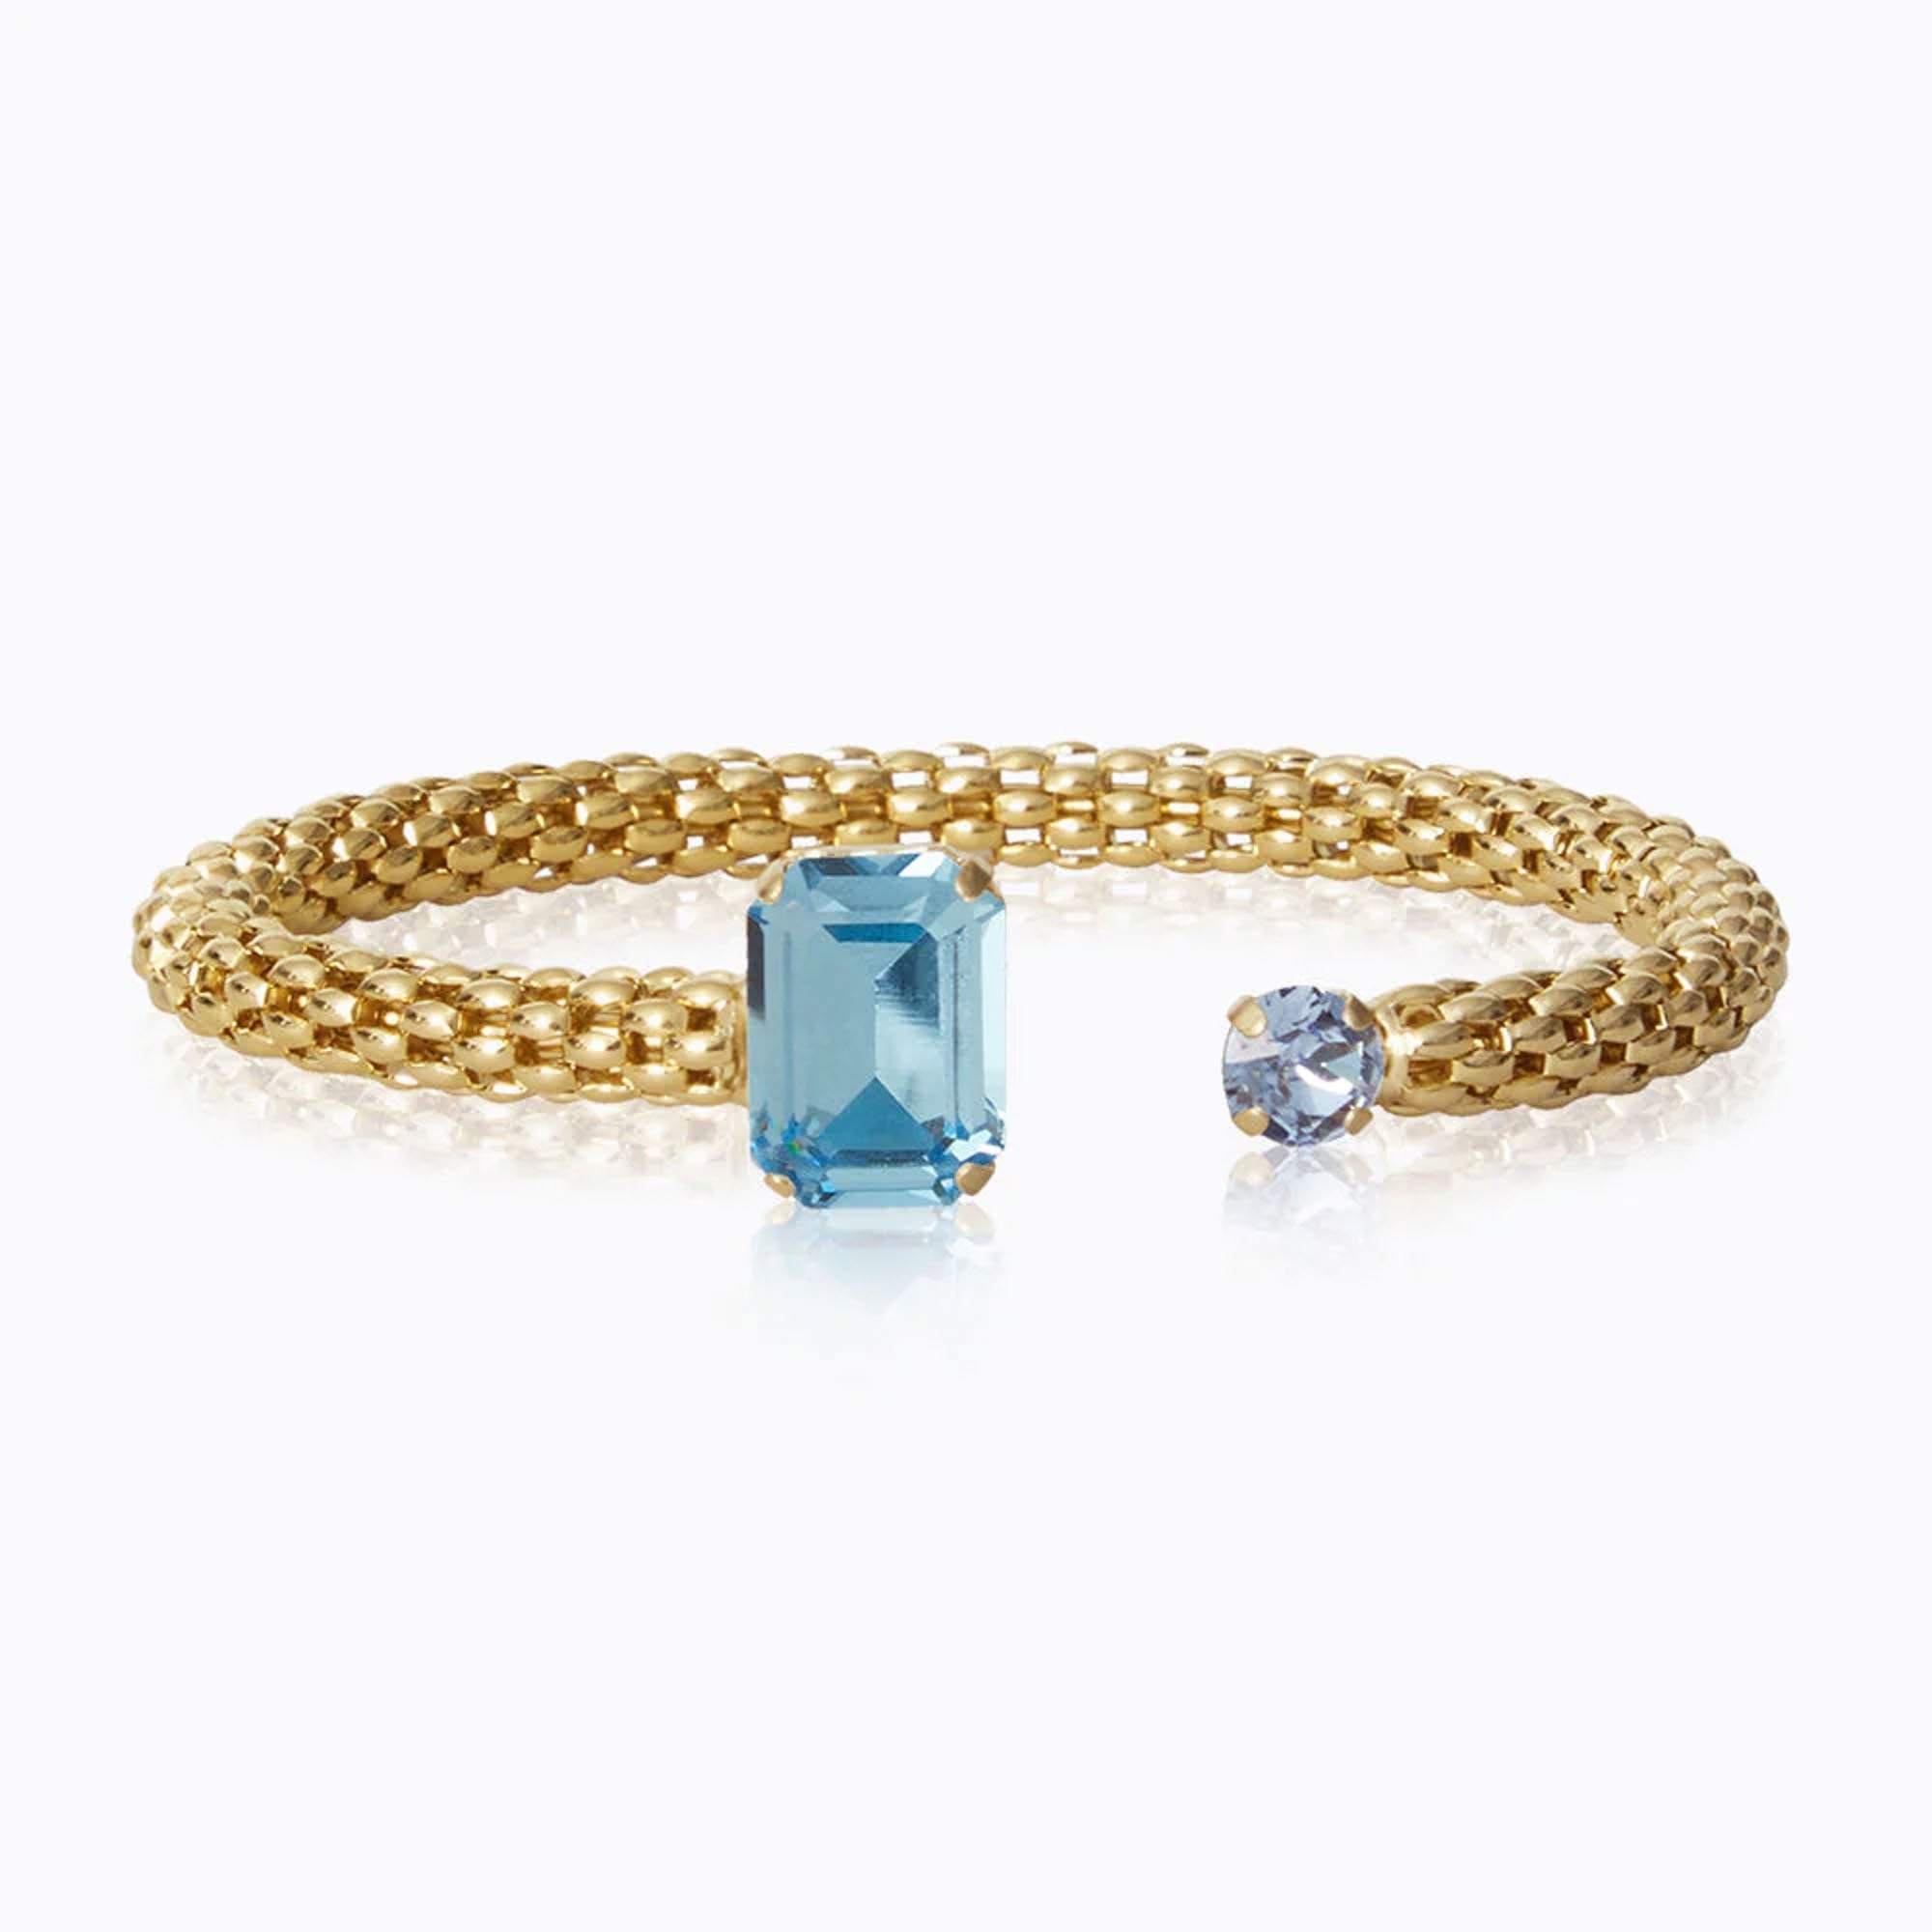 Buy Aquamarine Men Bracelet. Silver Men Bracelet. Gold Men Jewelry.husband  Birthday Gift. Present for Boyfriend. Male Friend Jewelry Gift. His Online  in India - Etsy